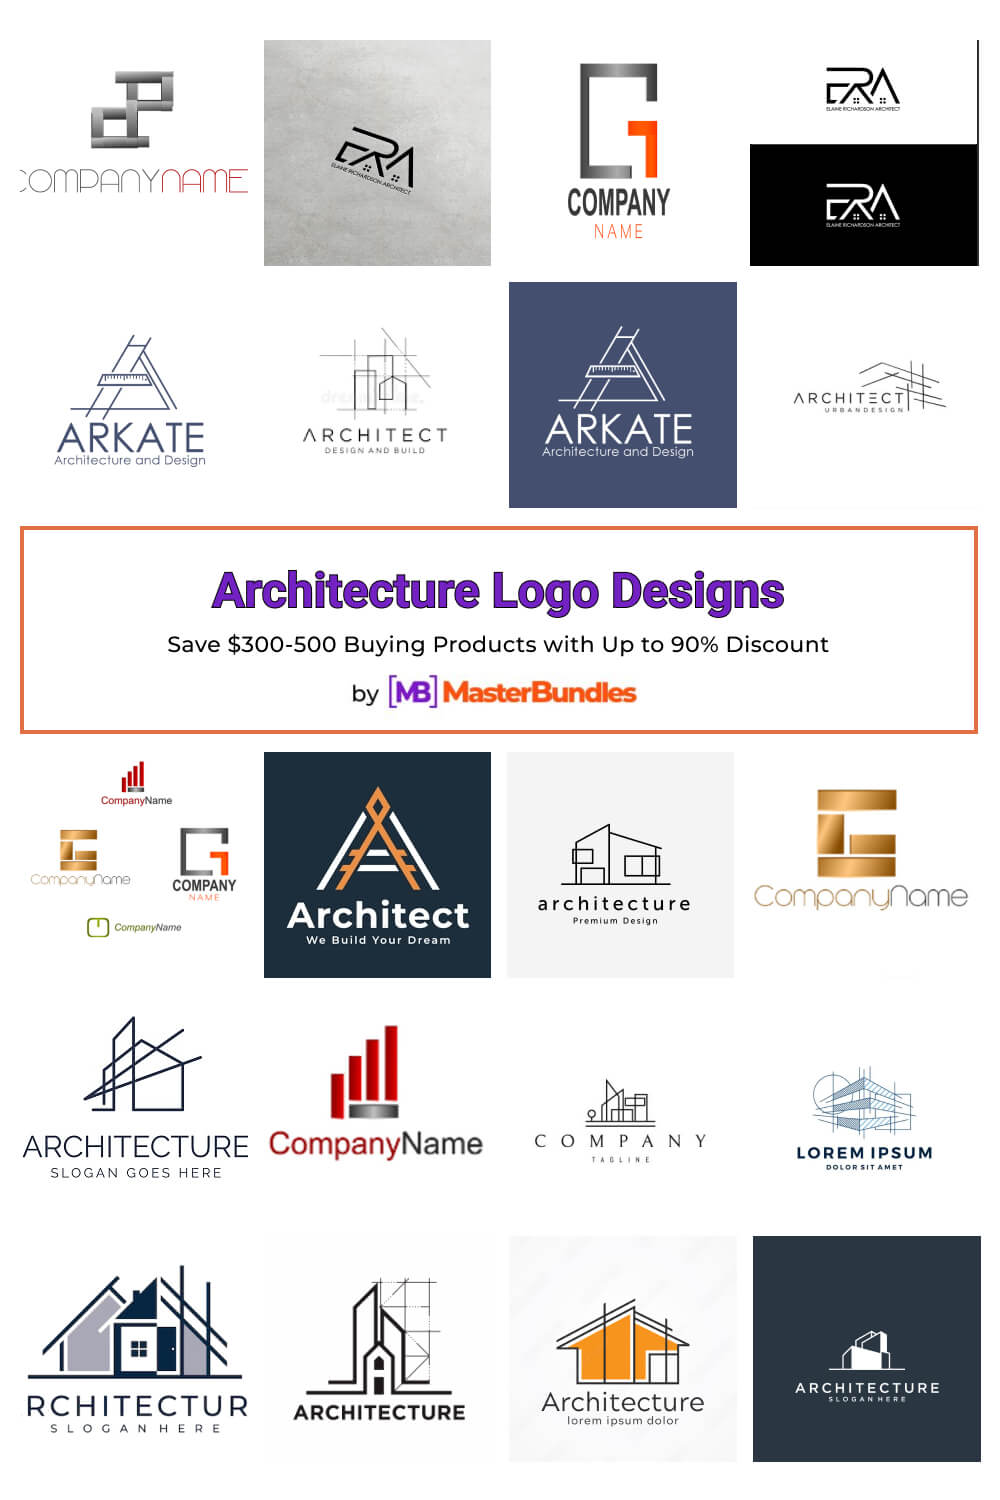 architecture logo designs pinterest image.